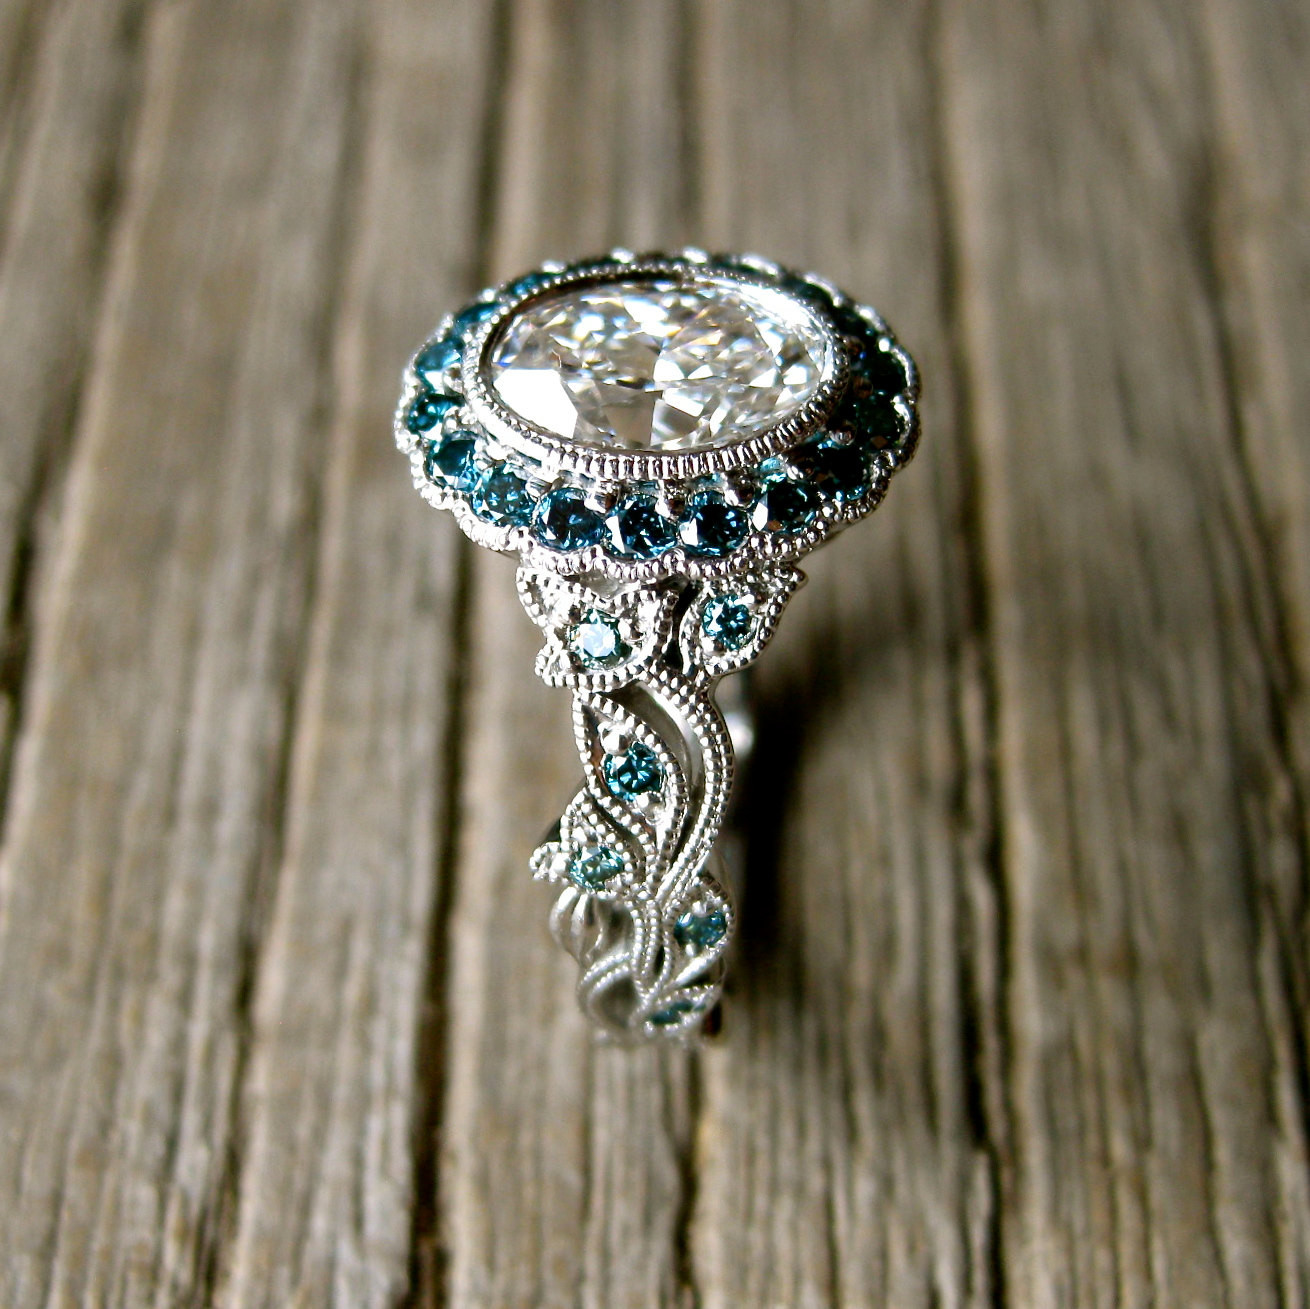 Turquoise Diamond Engagement Rings
 Yehuda Diamond Engagement Ring in Platinum with Teal Turquoise